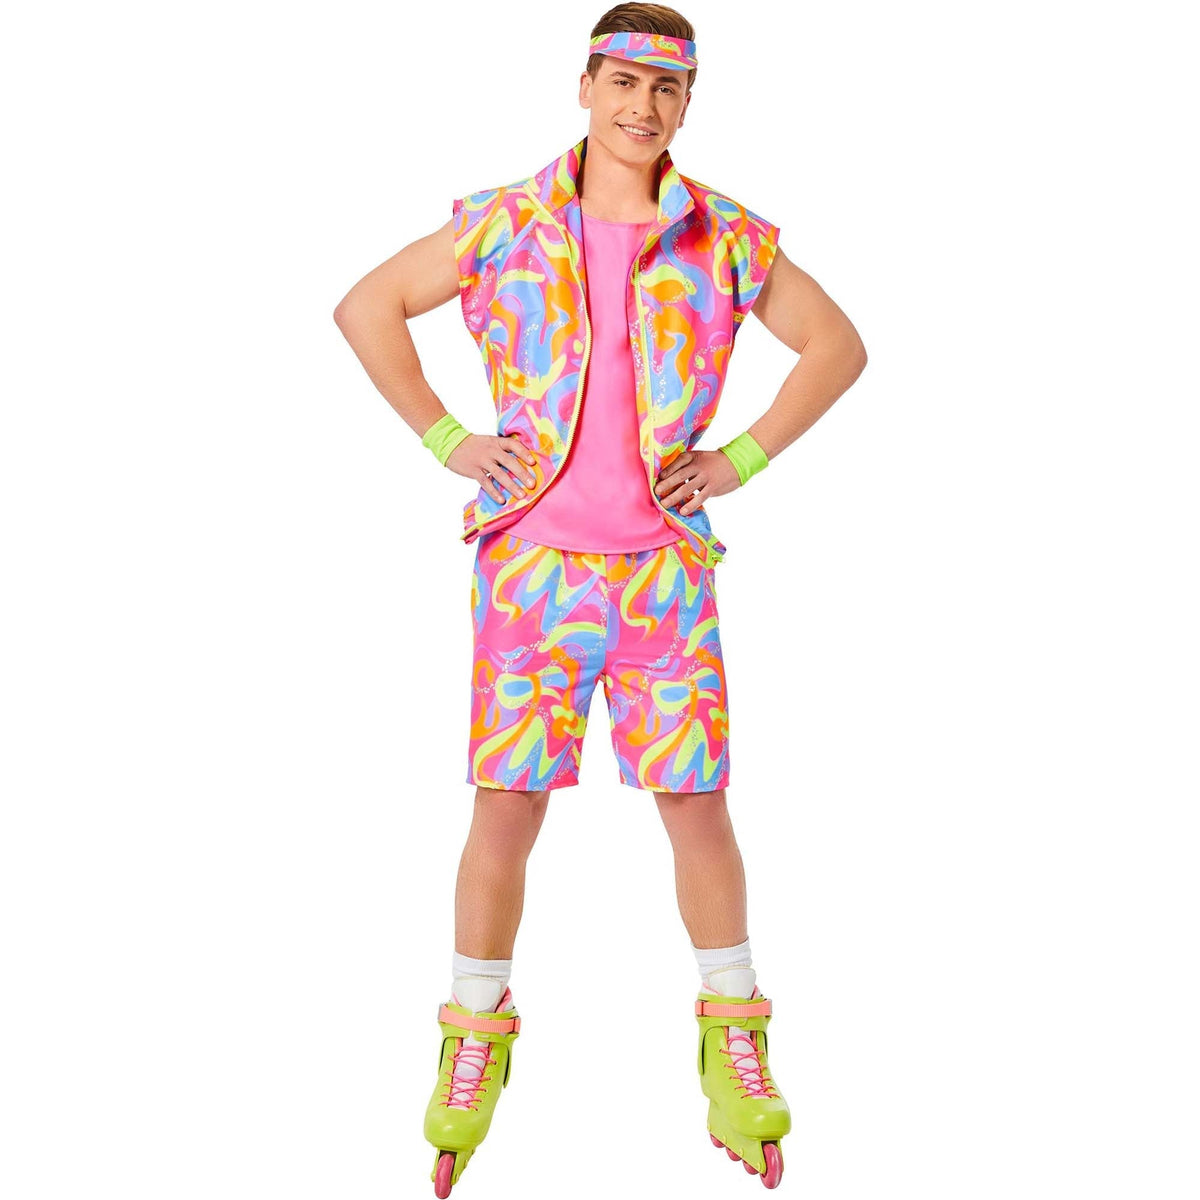 IN SPIRIT DESIGNS Costumes Barbie Ken Roller Blading Costume for Adults